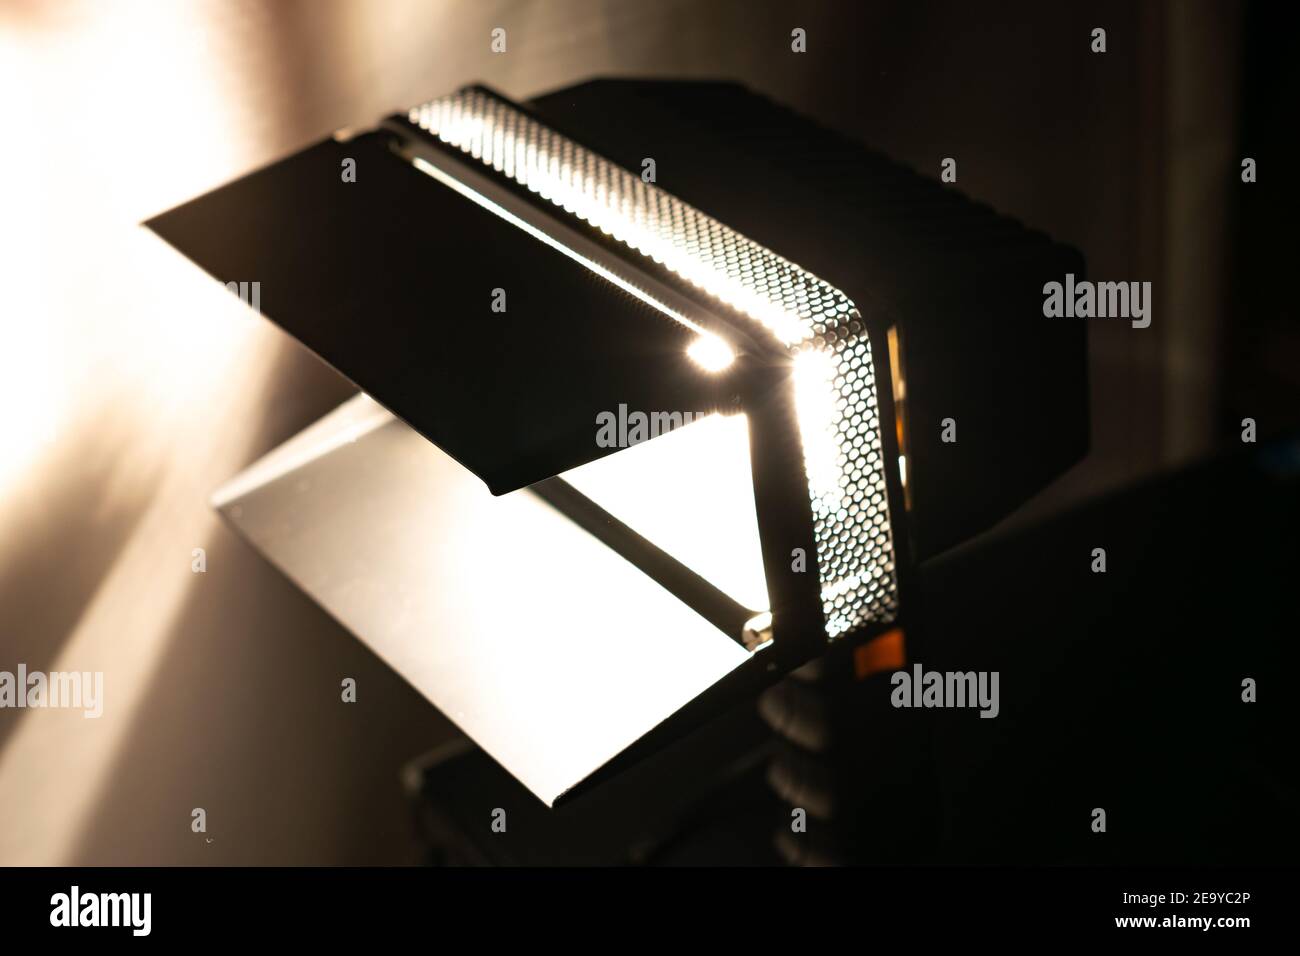 https://c8.alamy.com/comp/2E9YC2P/photo-or-cinema-external-illumination-flectalux-1000-w-used-for-cinematic-and-photographs-2E9YC2P.jpg